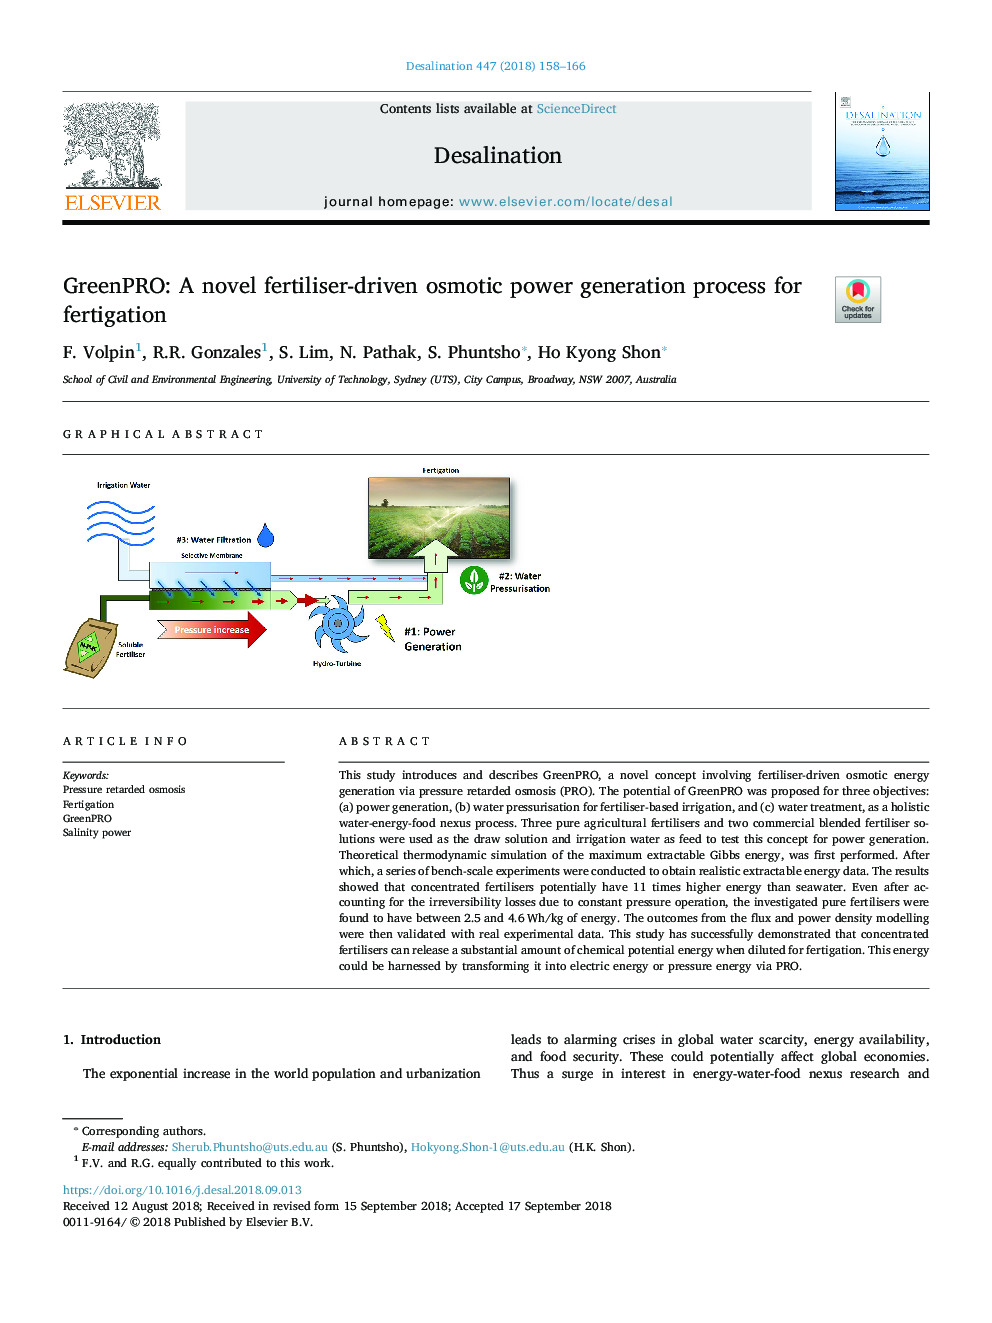 GreenPRO: A novel fertiliser-driven osmotic power generation process for fertigation